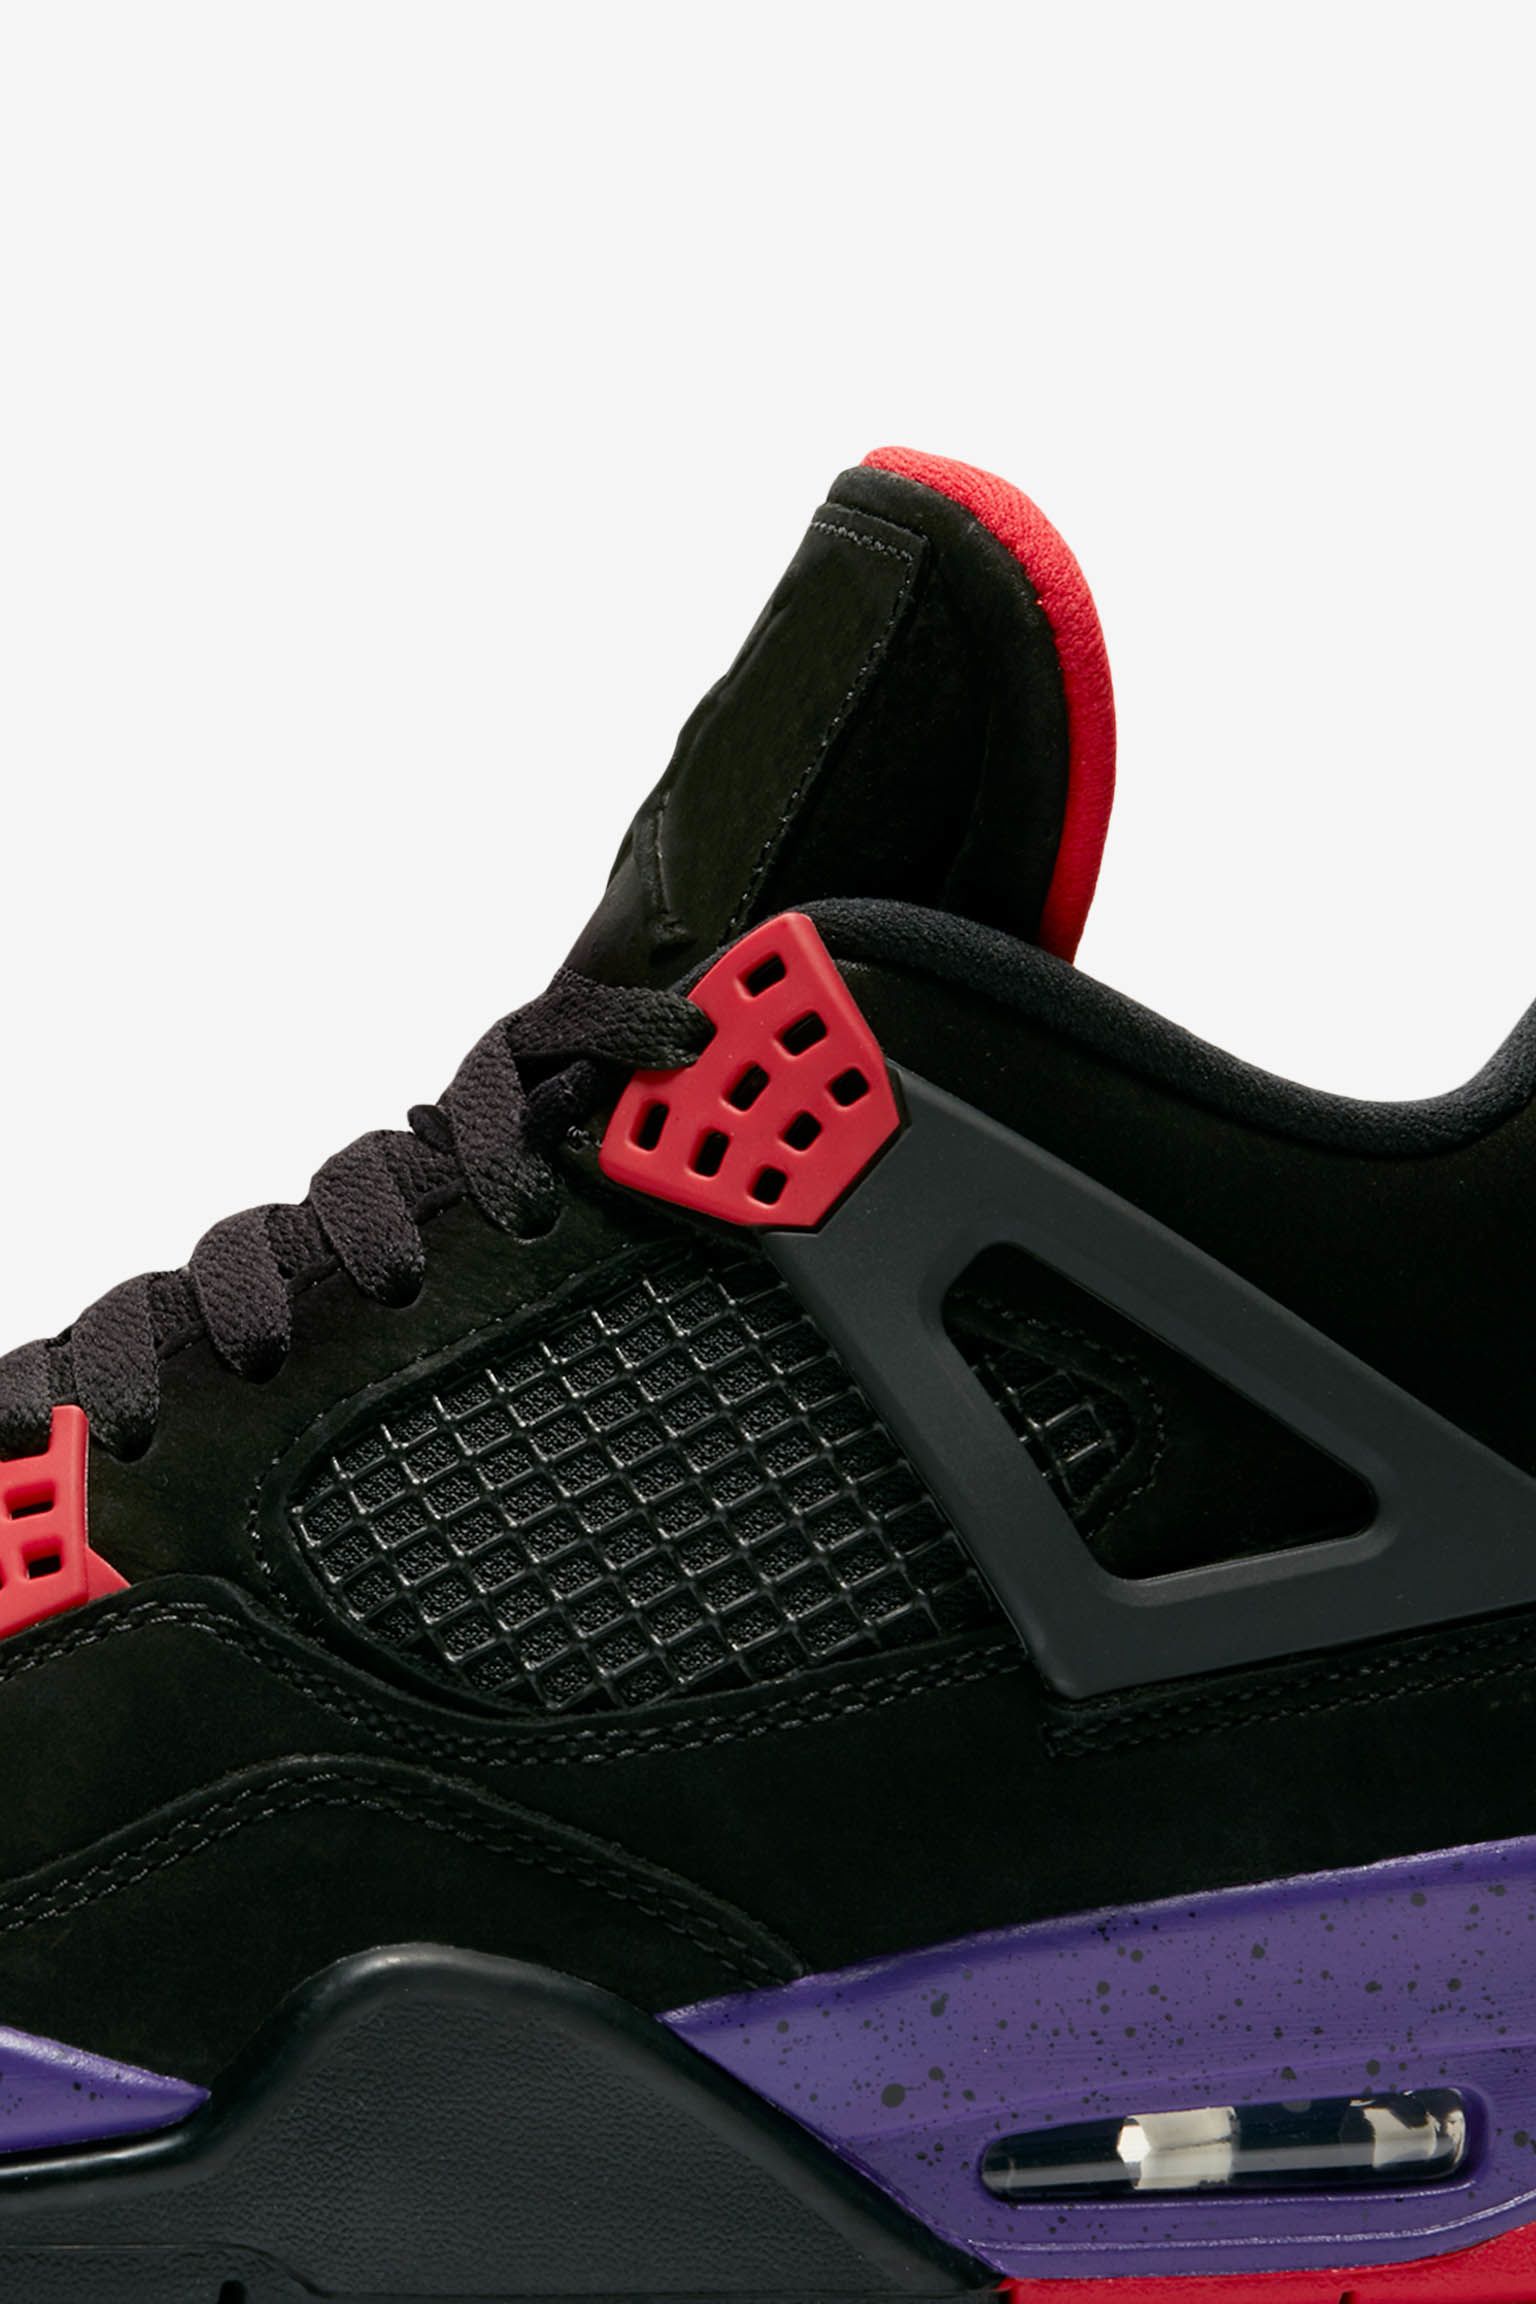 Air Jordan 4 Black Amp Court Purple Release Date Nike Snkrs Gb